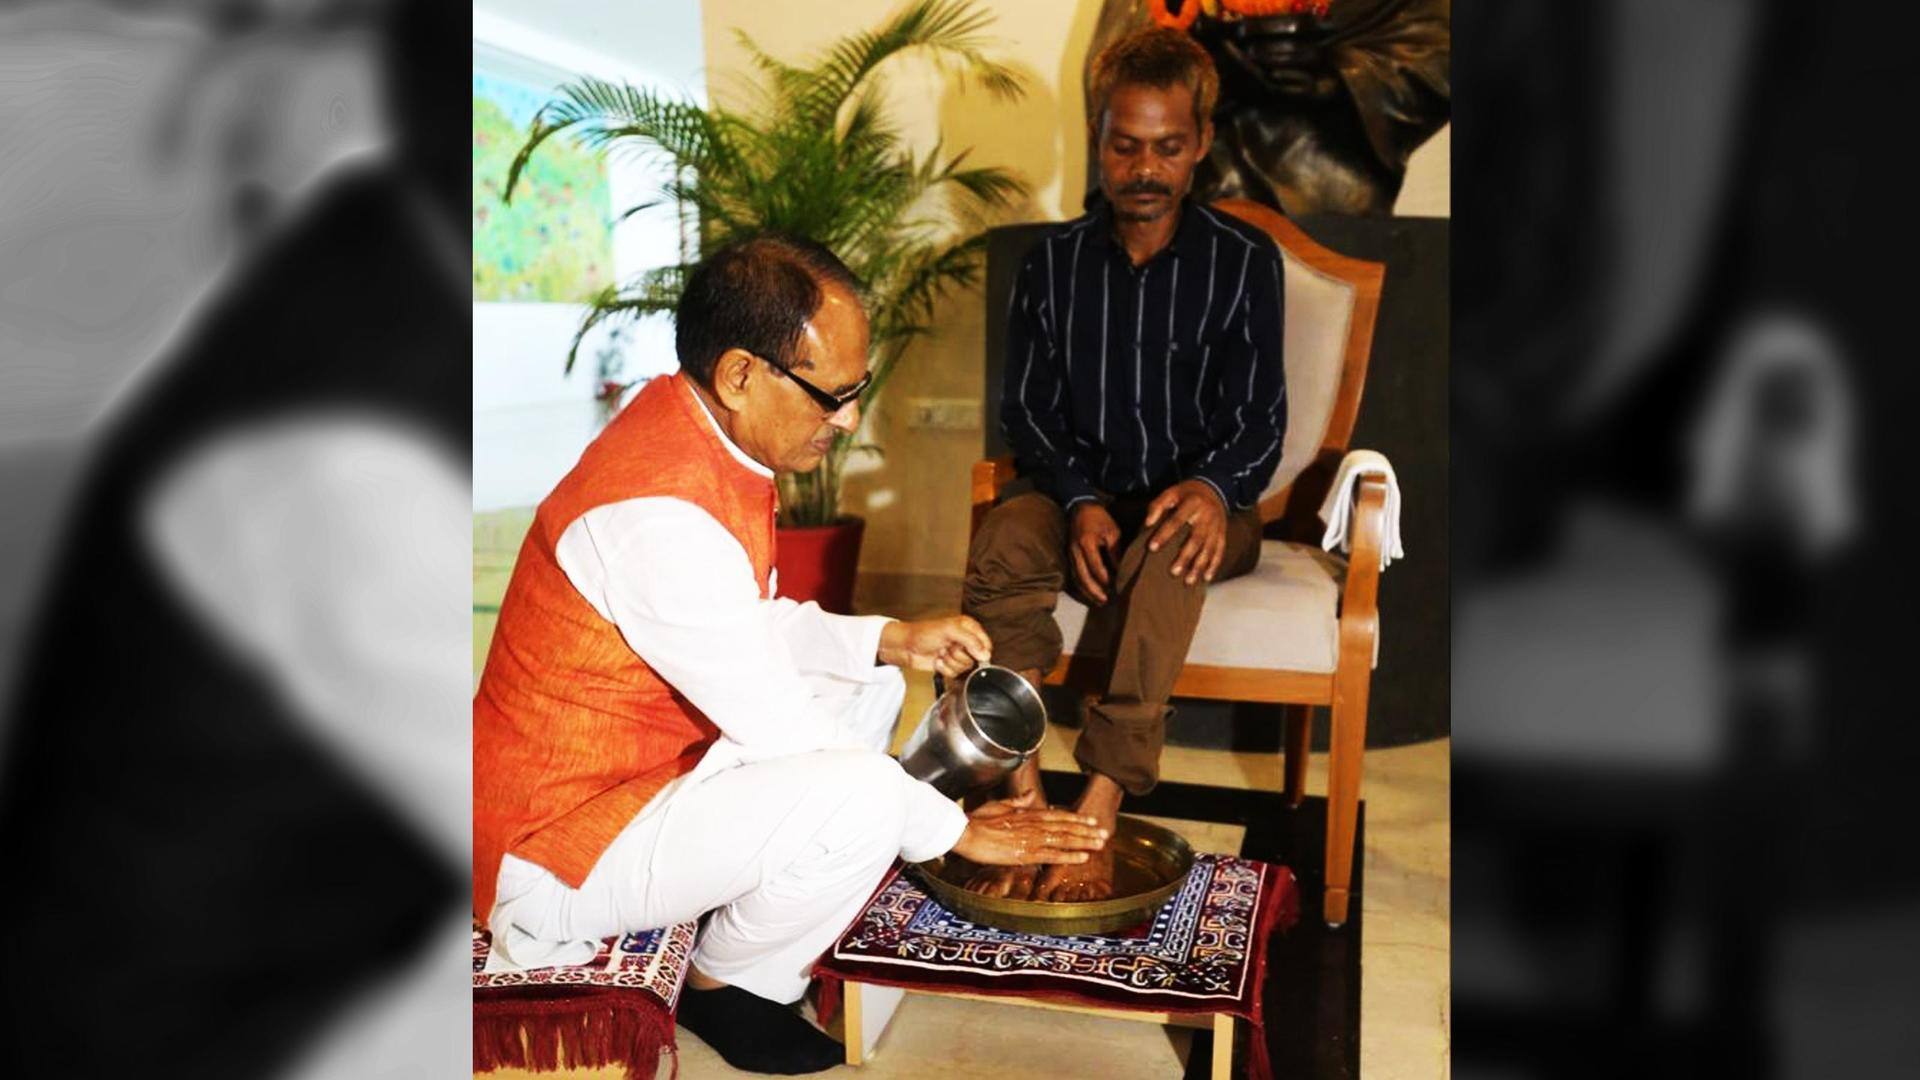 Watch: MP CM washes feet of victim amid urination row